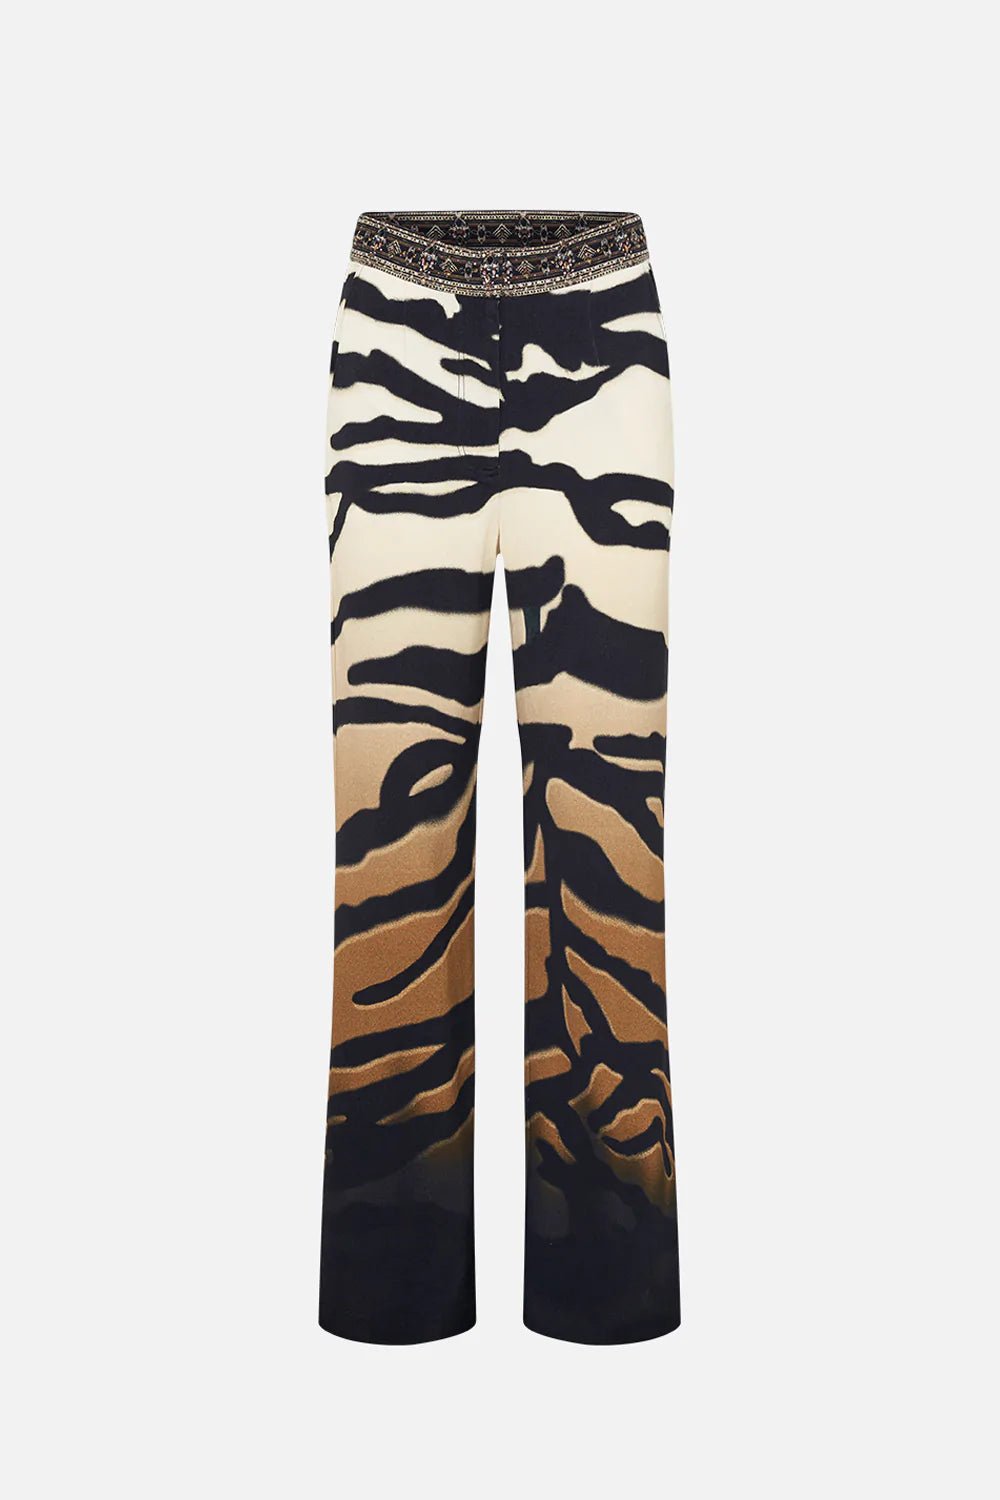 CAMILLA - Full Length Flared Pant Tame My Tiger - Camilla - Pinkhill - darwin fashion - darwin boutique